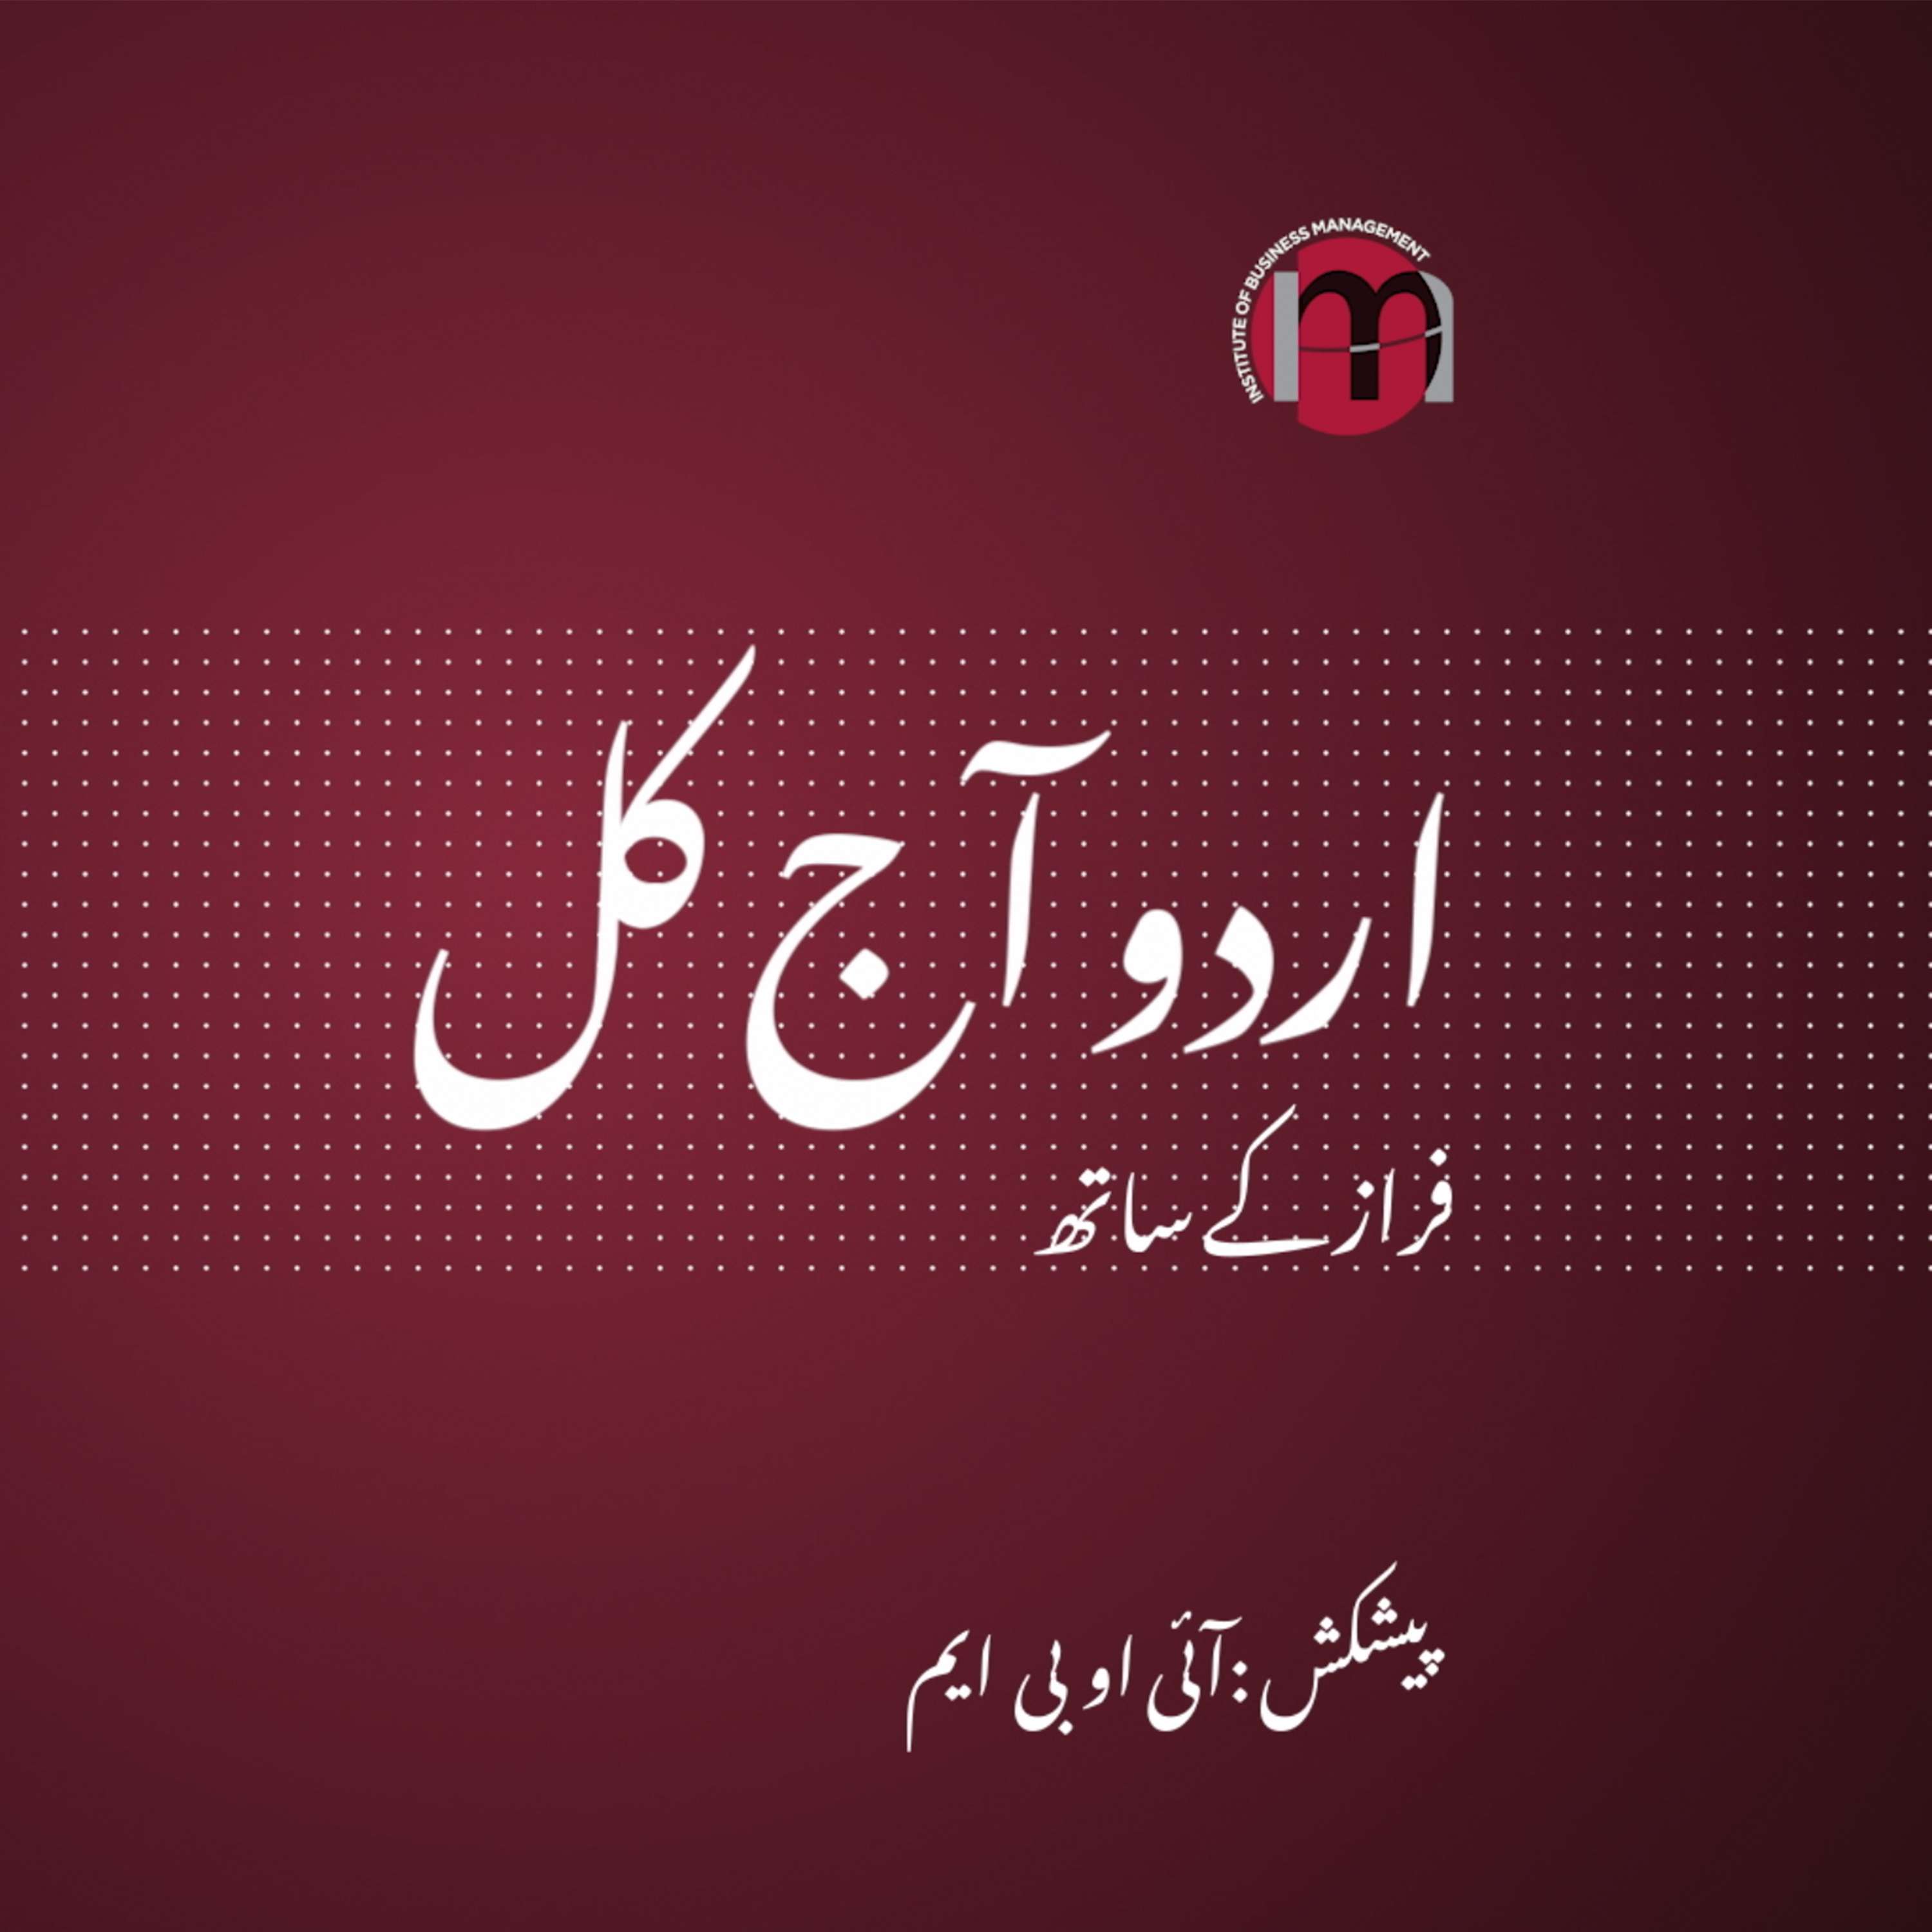 Imran Shamshaad | Urdu in Today's World